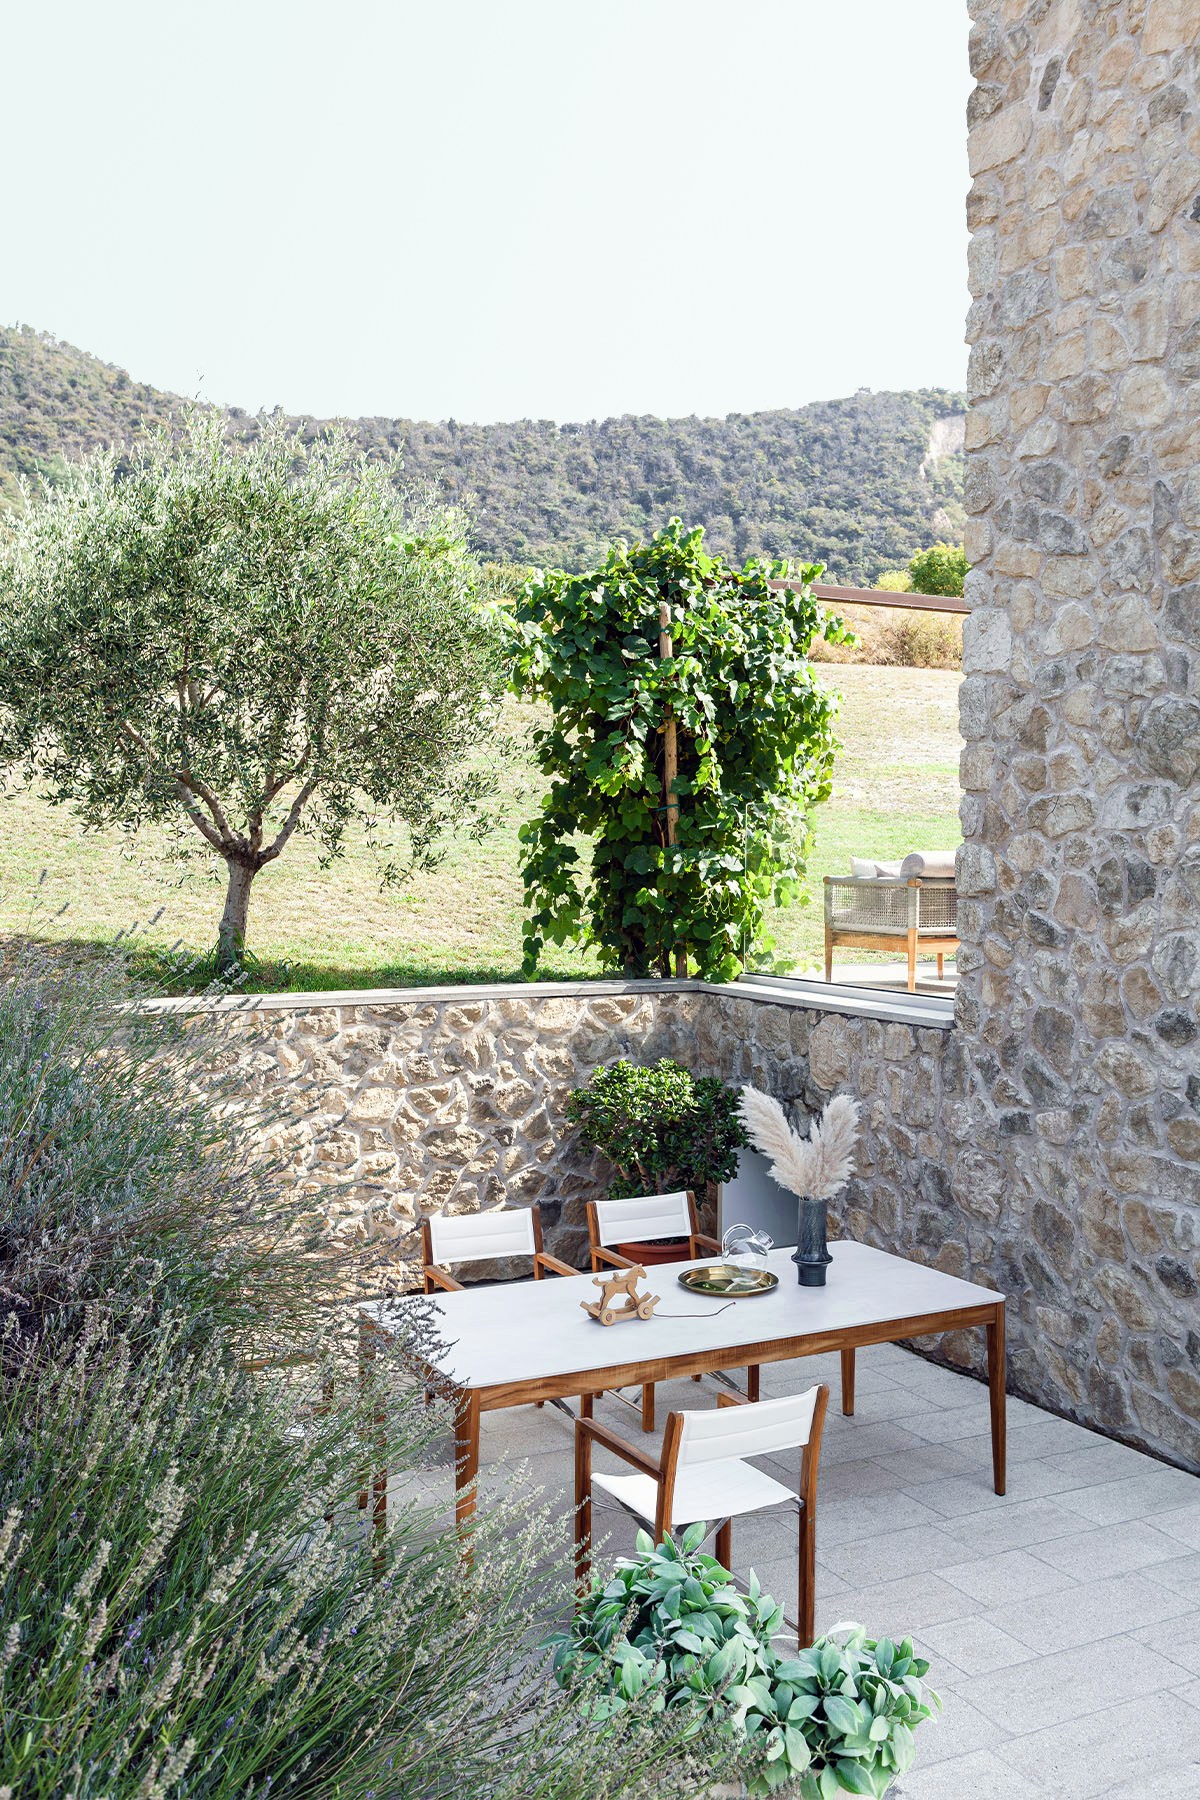 Atmosphera Dakota otdoor dining range in Italian country setting with large olive tree